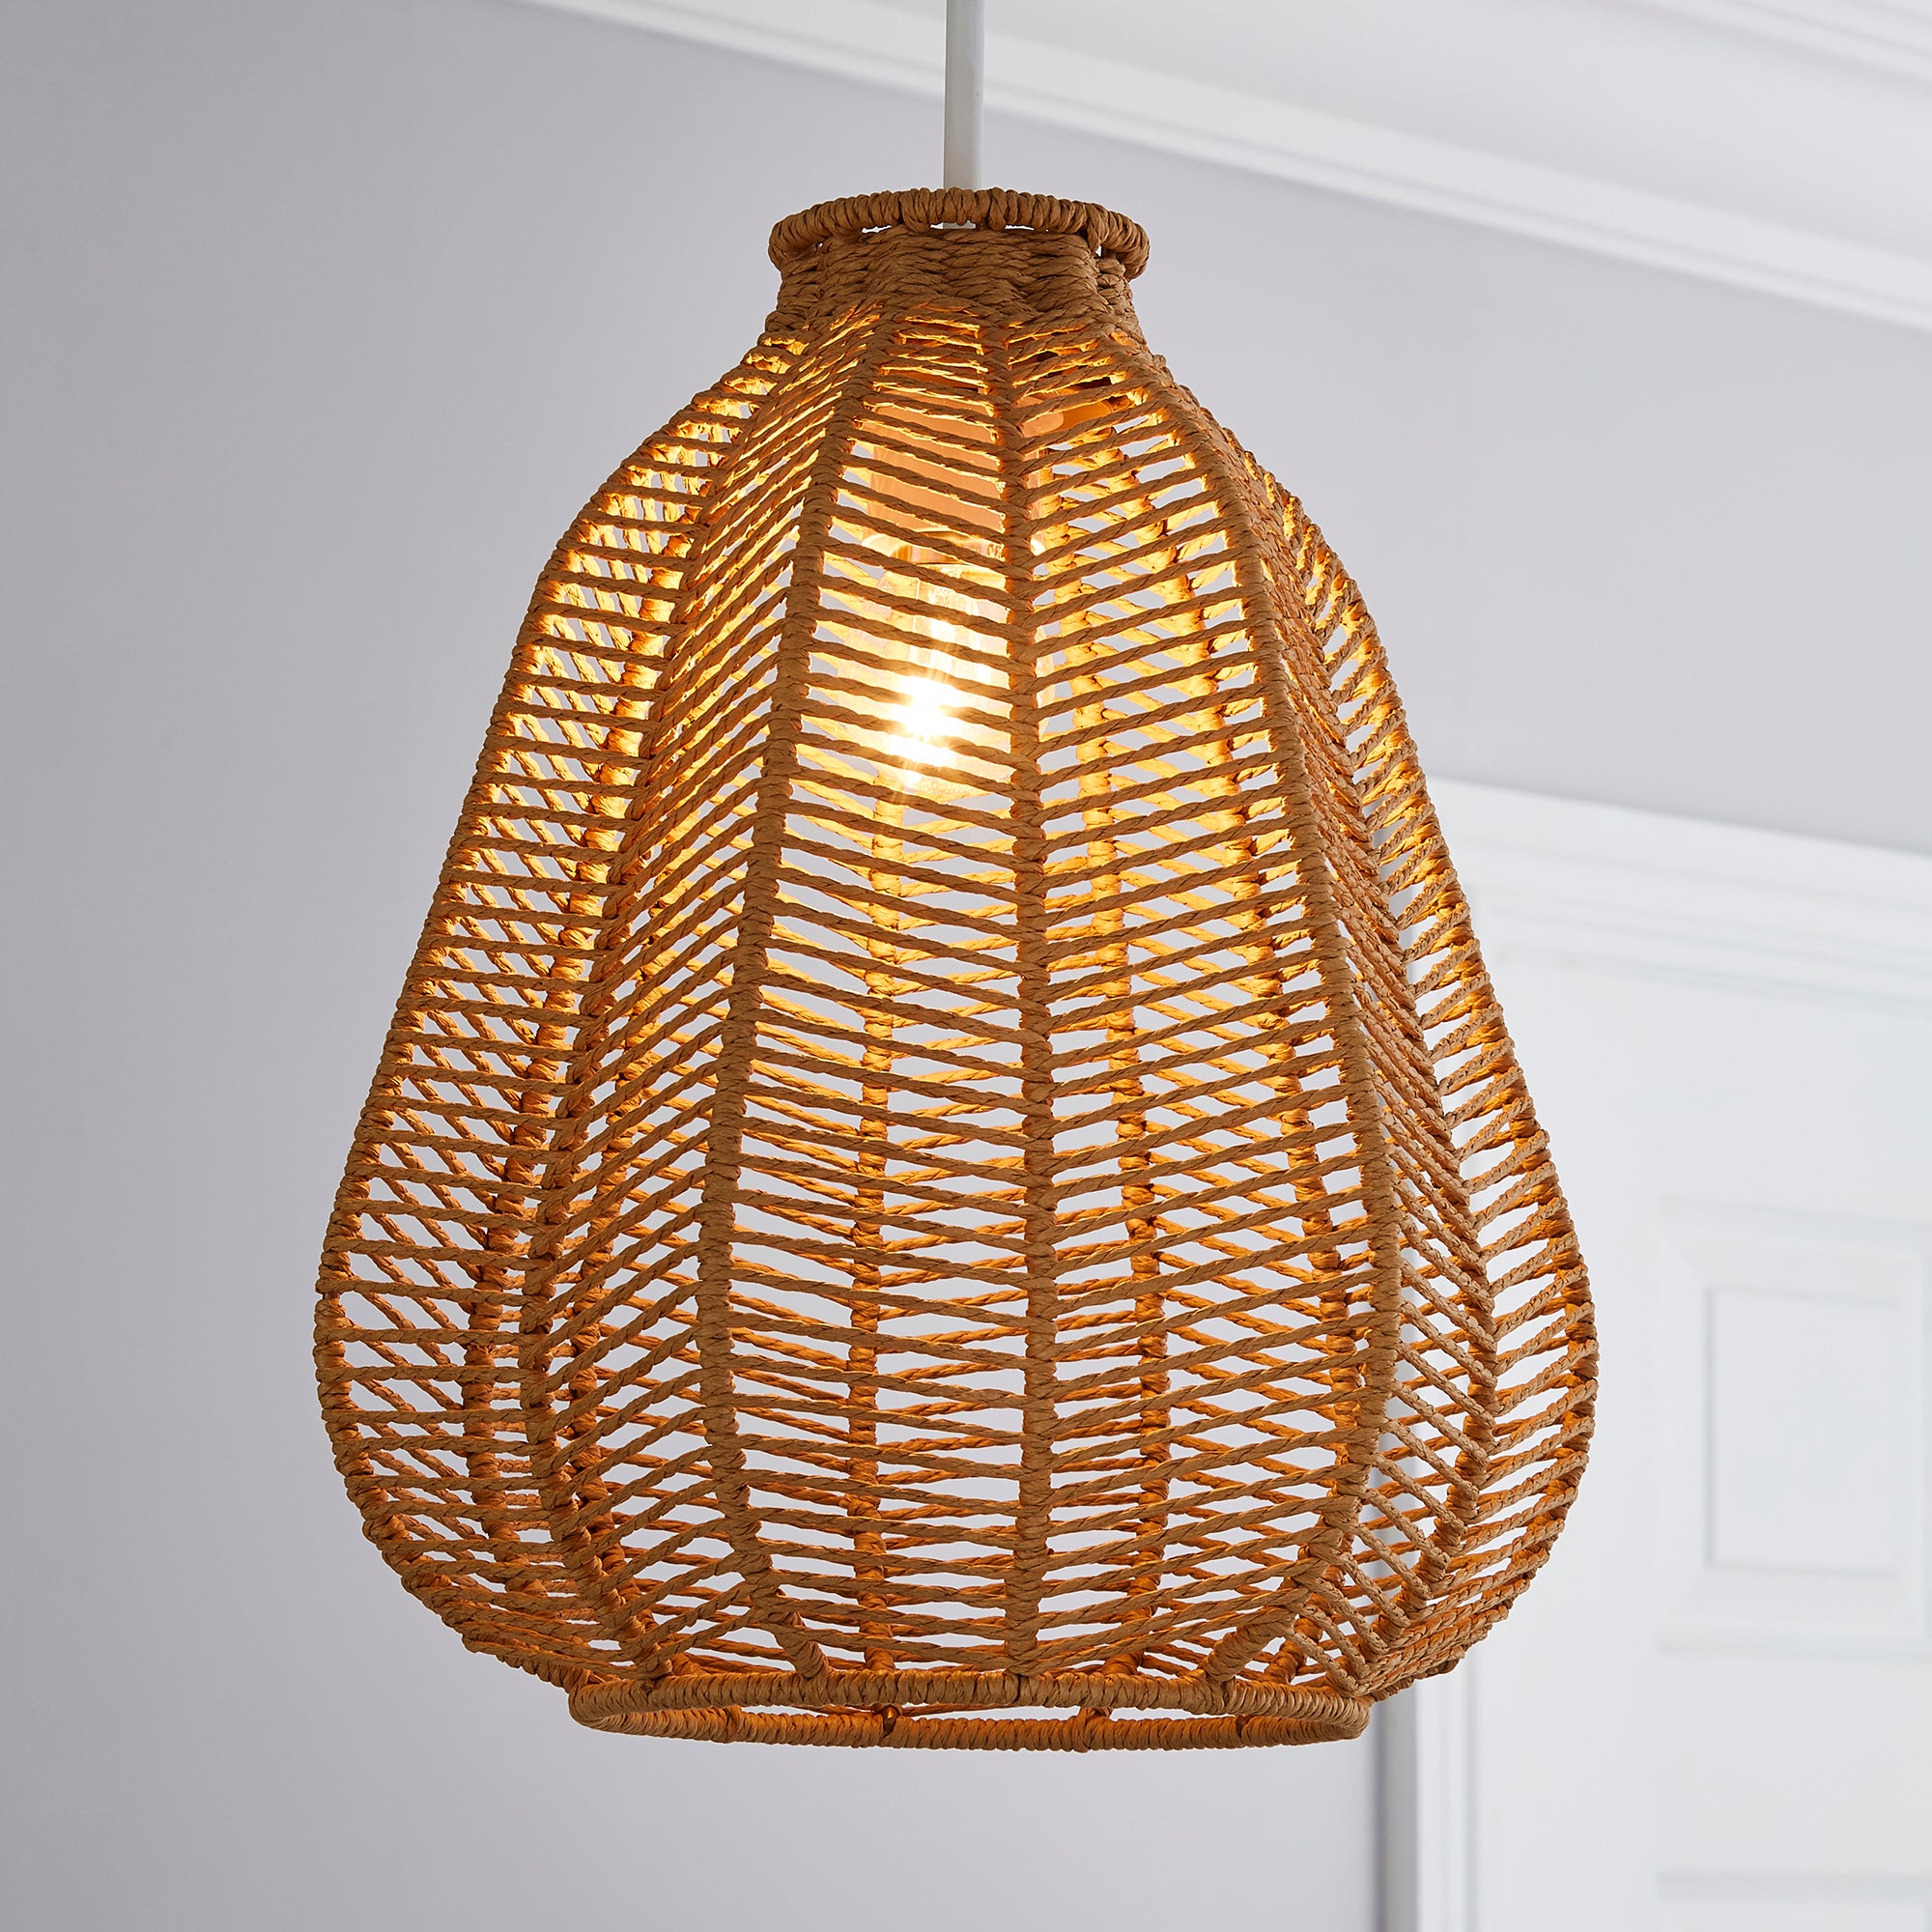 Ceiling Lamp Shades Uk Dunelm / Dunelm Lampshades For Sale Ebay